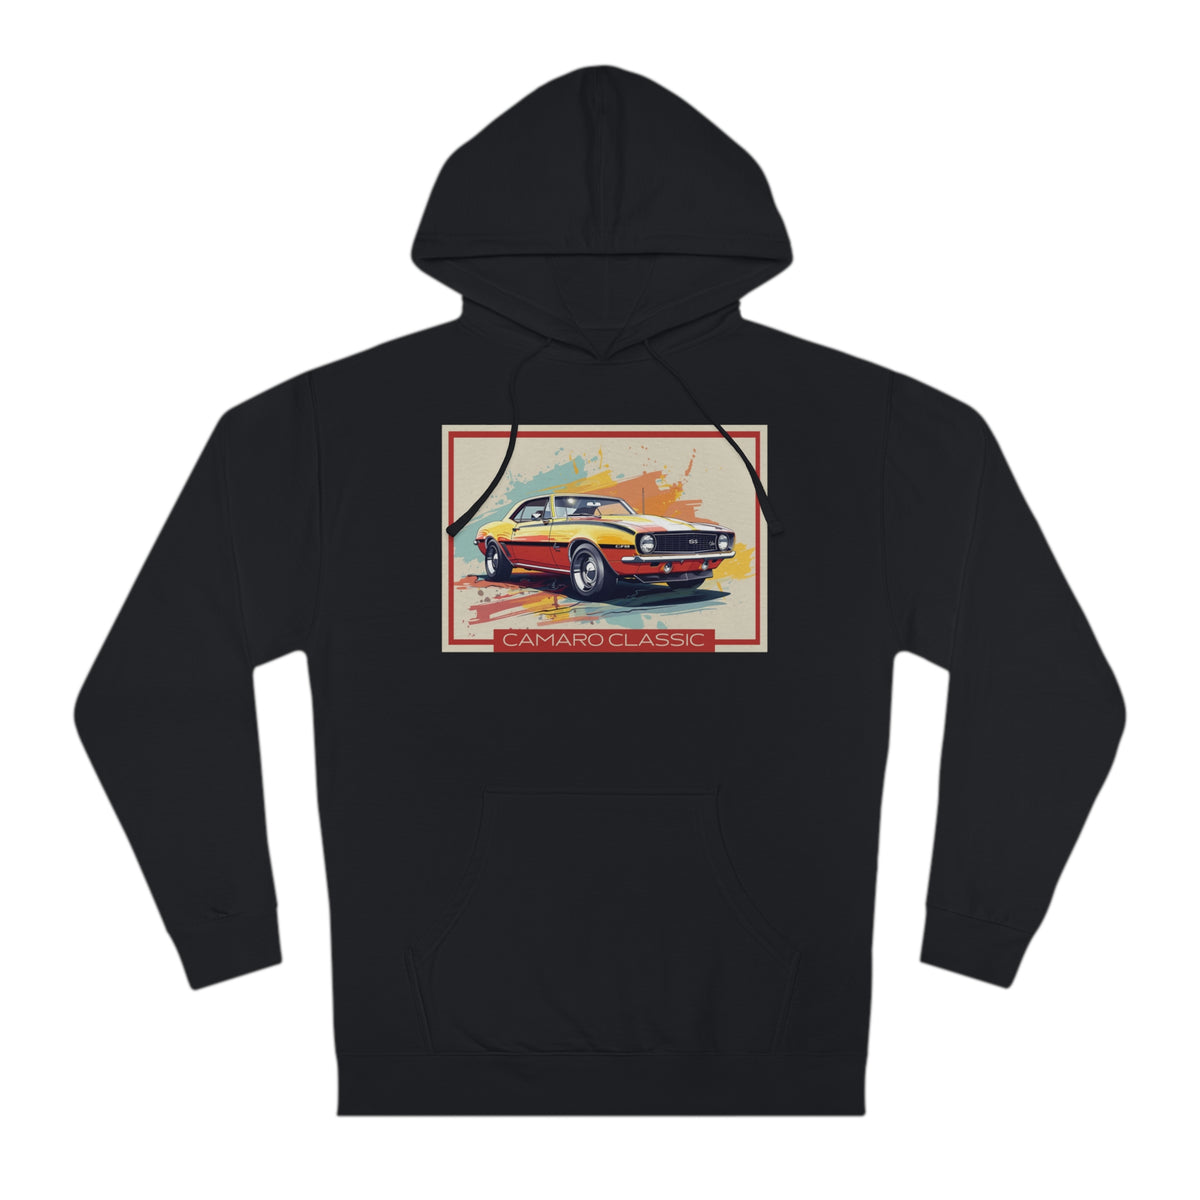 Camaro Classic Men's Hoodie - Vintage Car Enthusiast Collection Hooded Sweatshirt